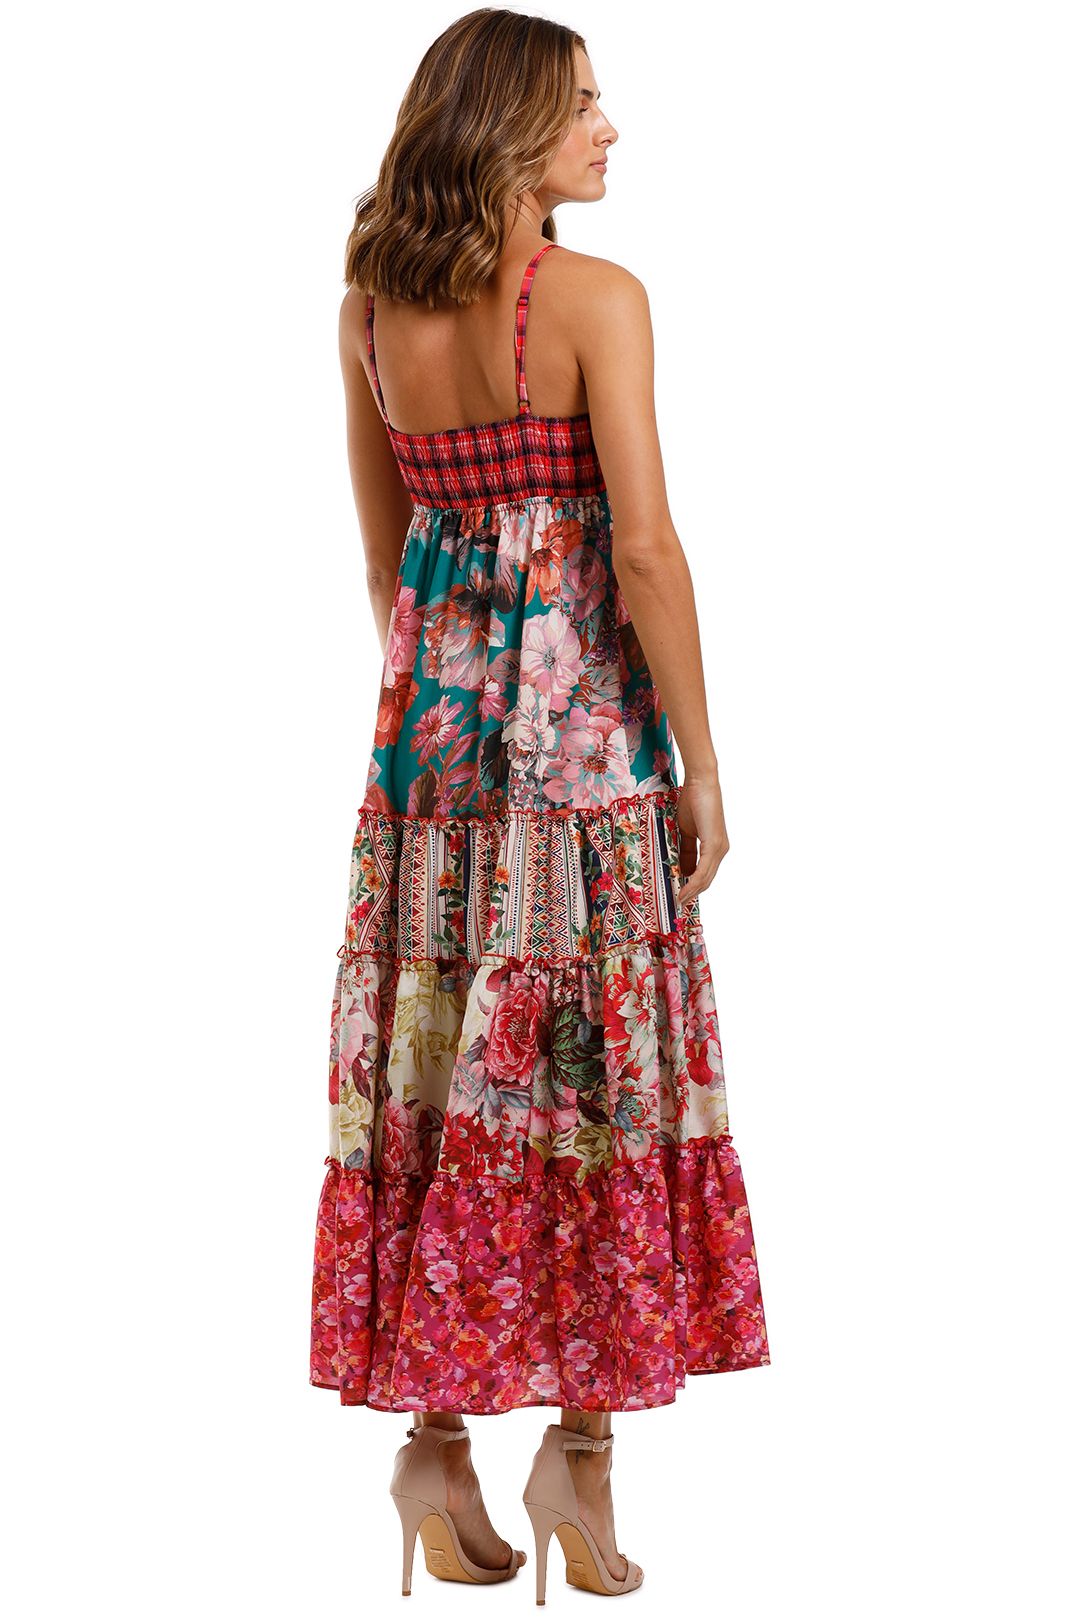 Kachel Lexi Mixed Print Tiered Maxi Dress Floral